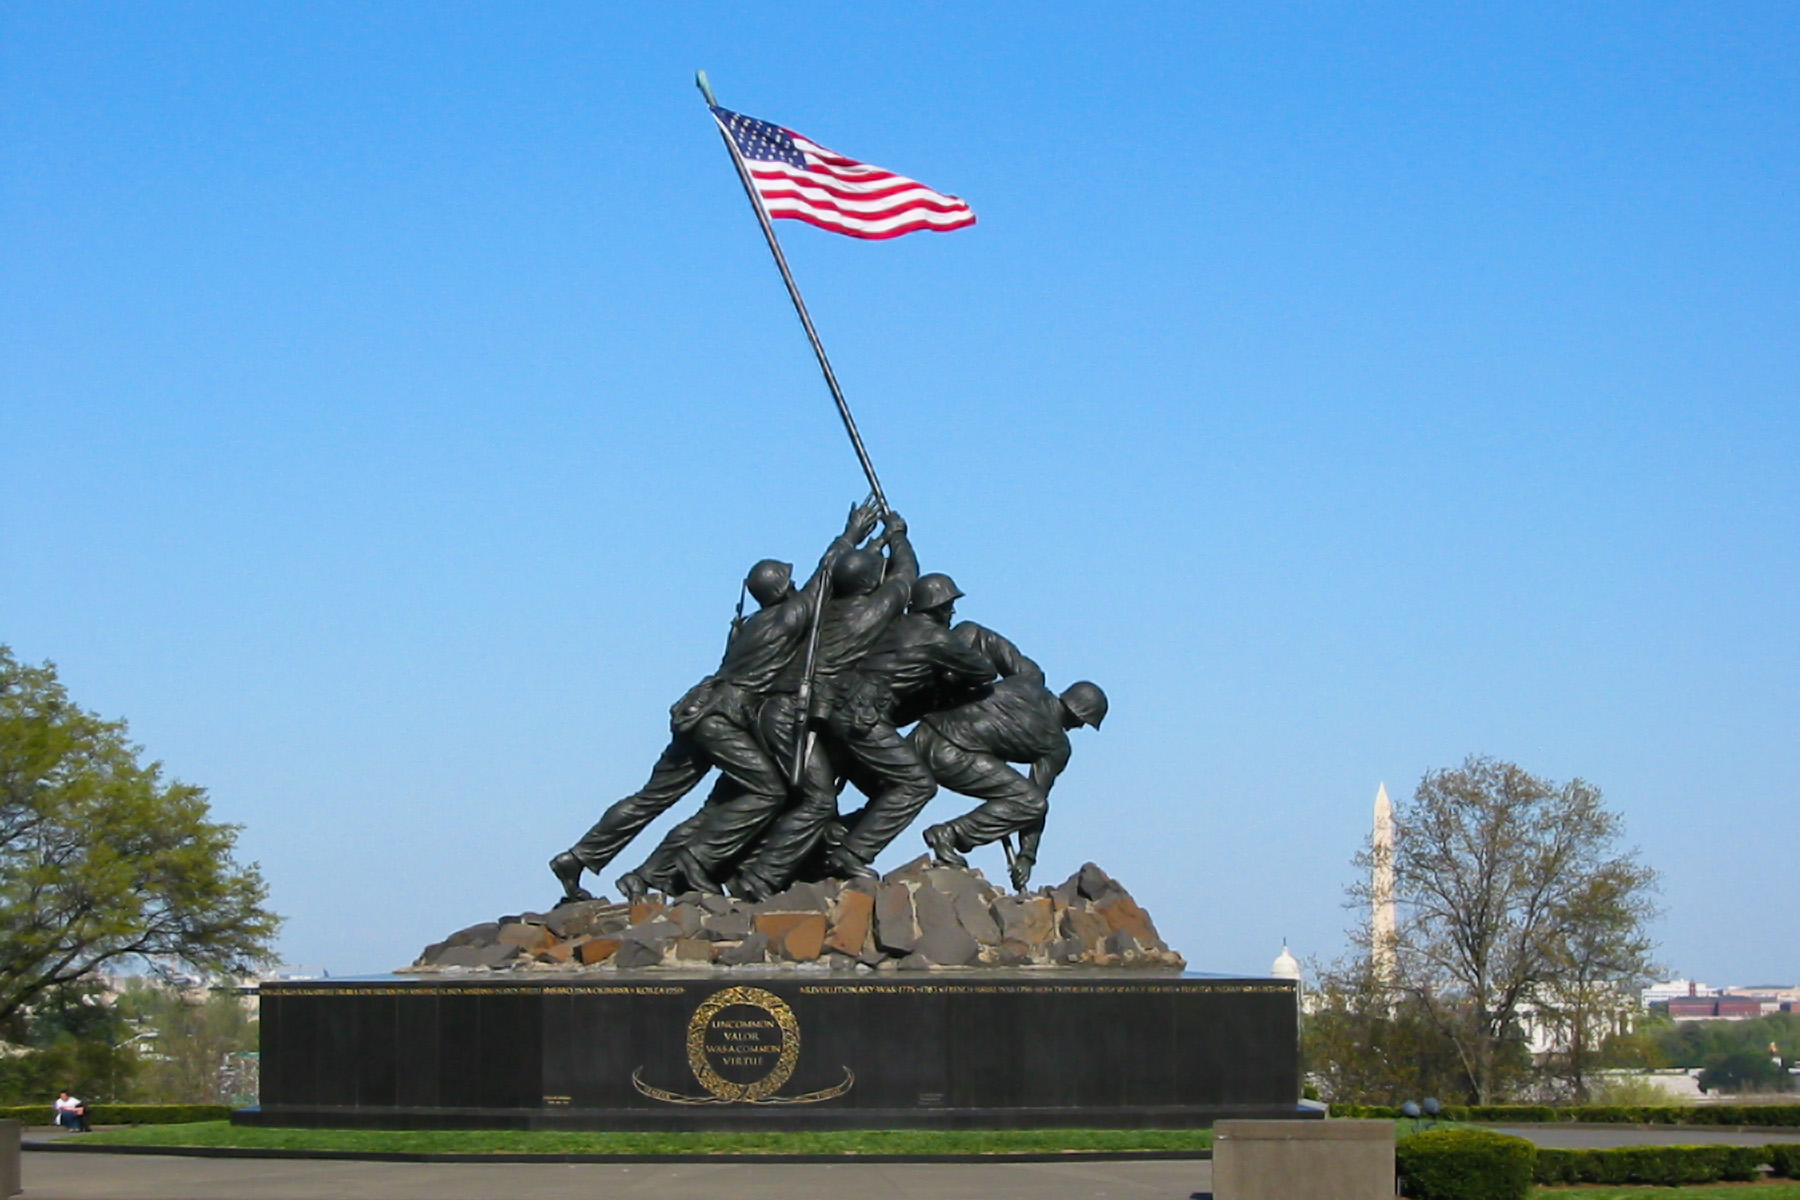 U.S. Marine Corps Iwo Jima Memorial, Arlington, Va. looking across toward the National Mall.  Click for next photo.